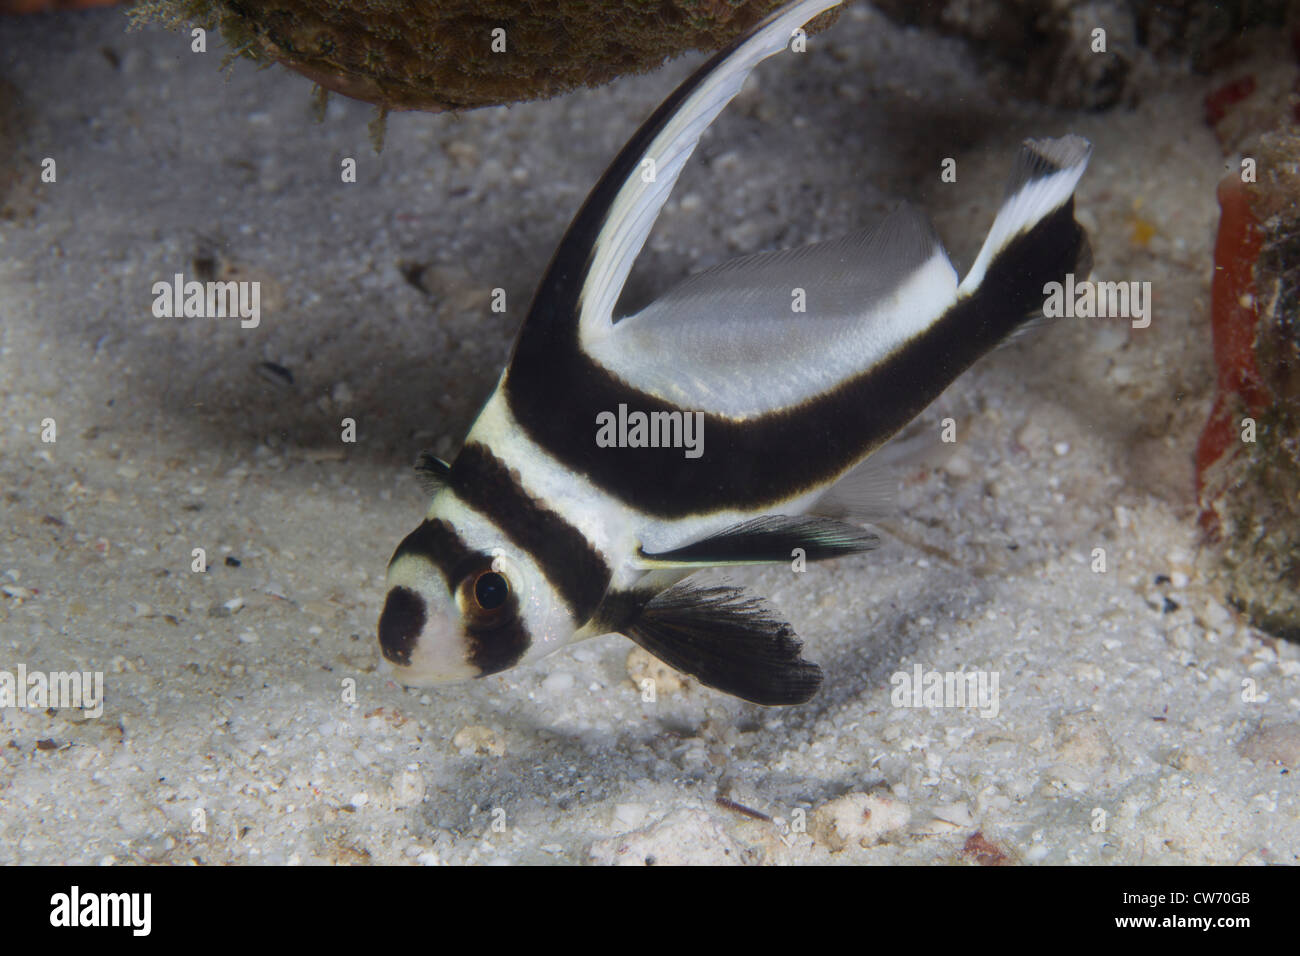 Closeup of Jackknife fish in the sand Stock Photo